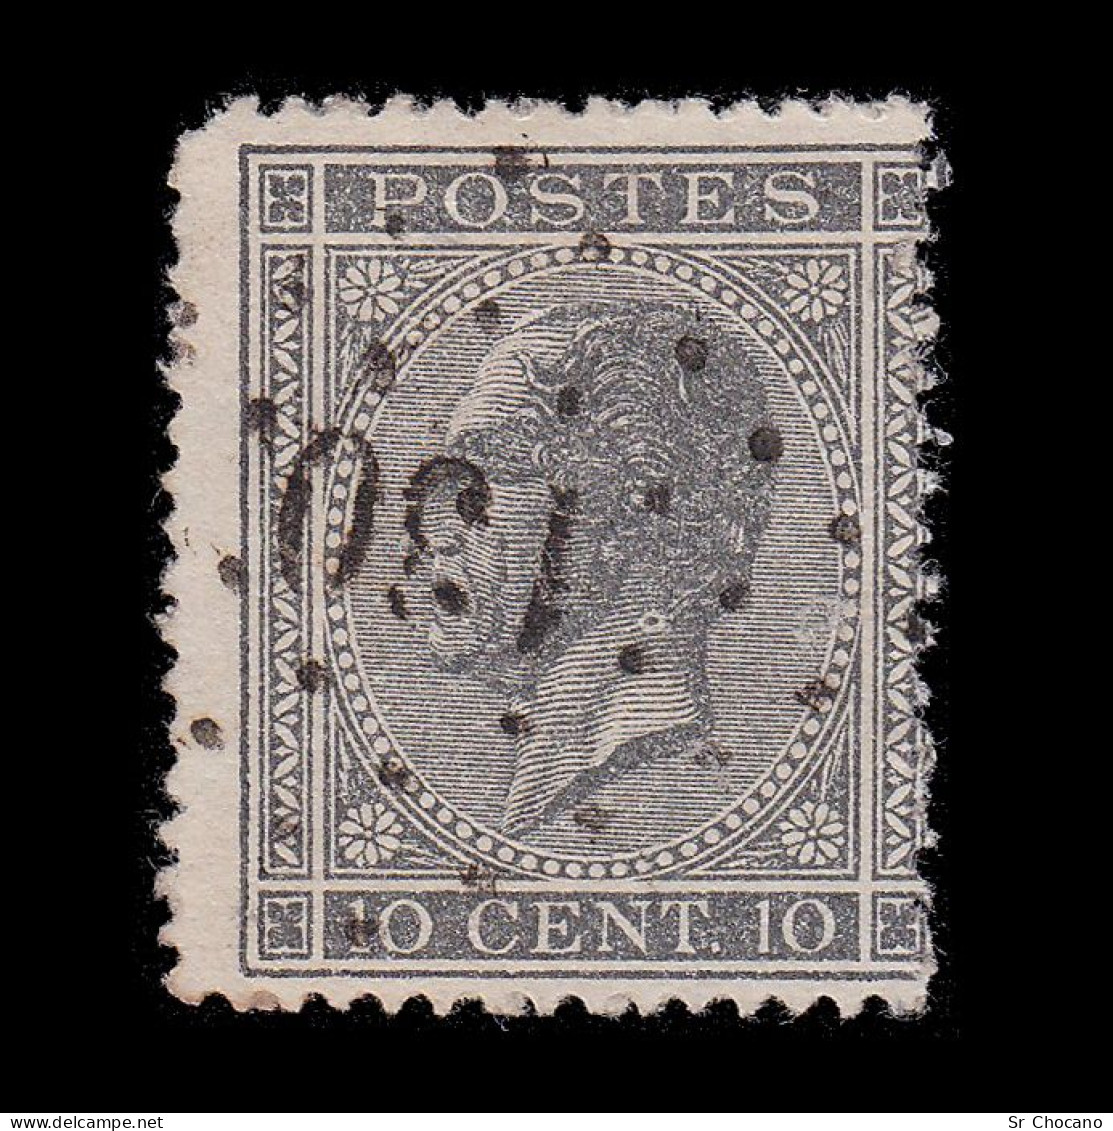 BELGIUM.1867.King Leopold I.10c.SCOTT 18.CANCEL 180. - 1866-1867 Petit Lion